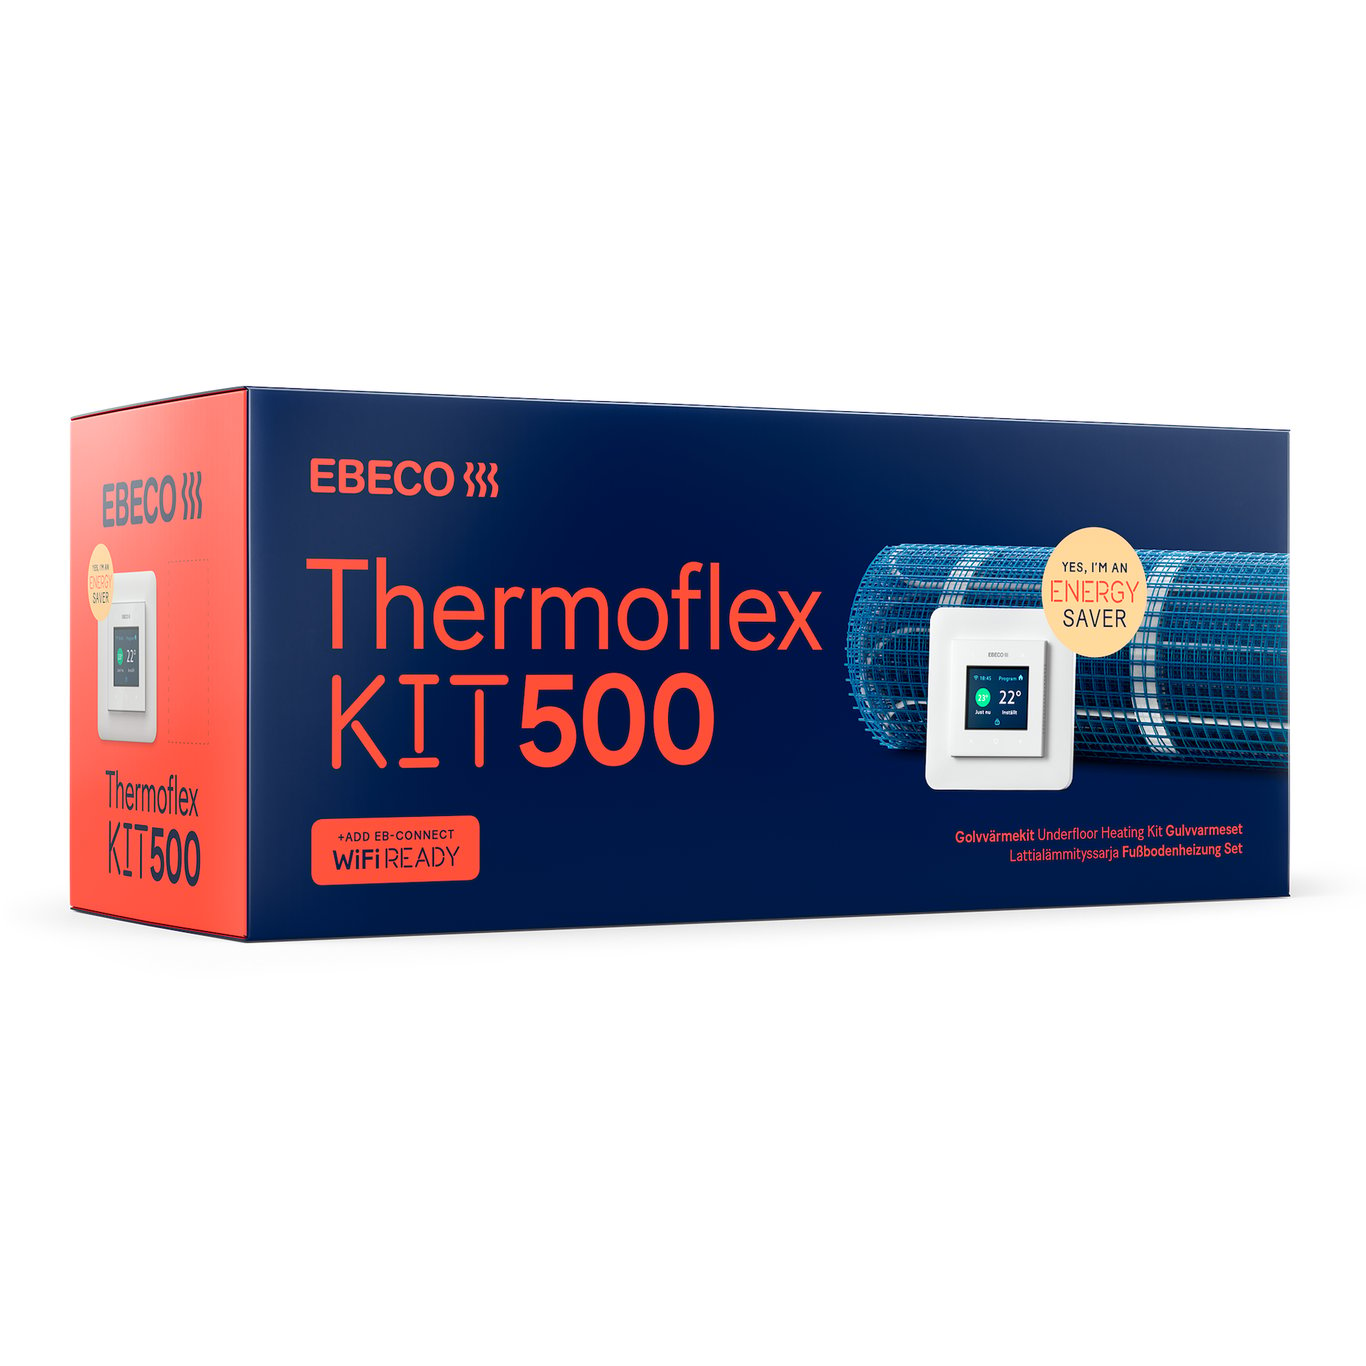 EBECO THERMOFLEX KIT 500 6,6M2 780W